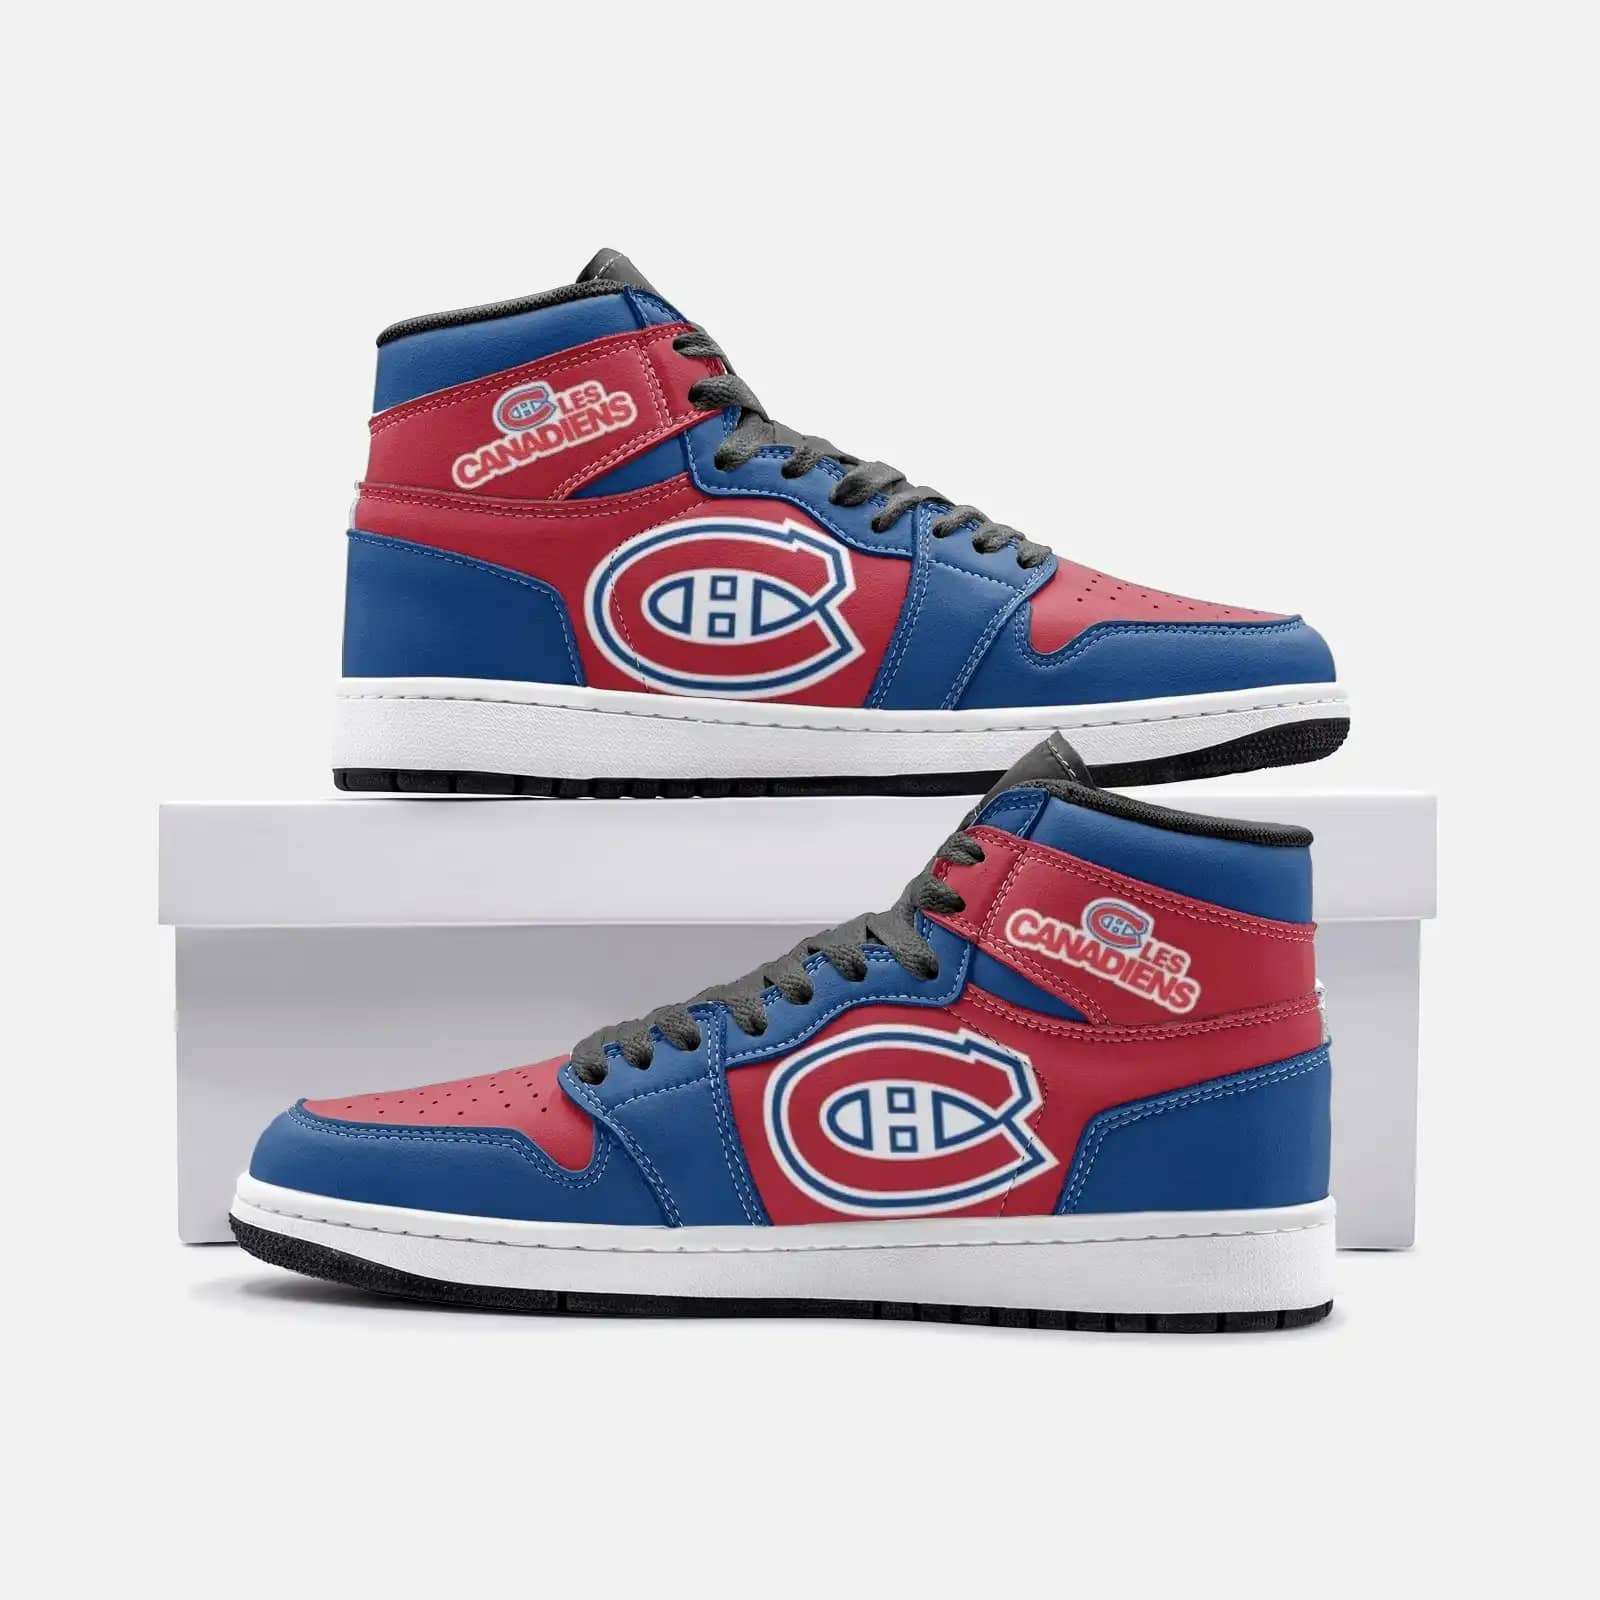 Montreal Canadiens Fan Unofficial Air Jordan Shoes